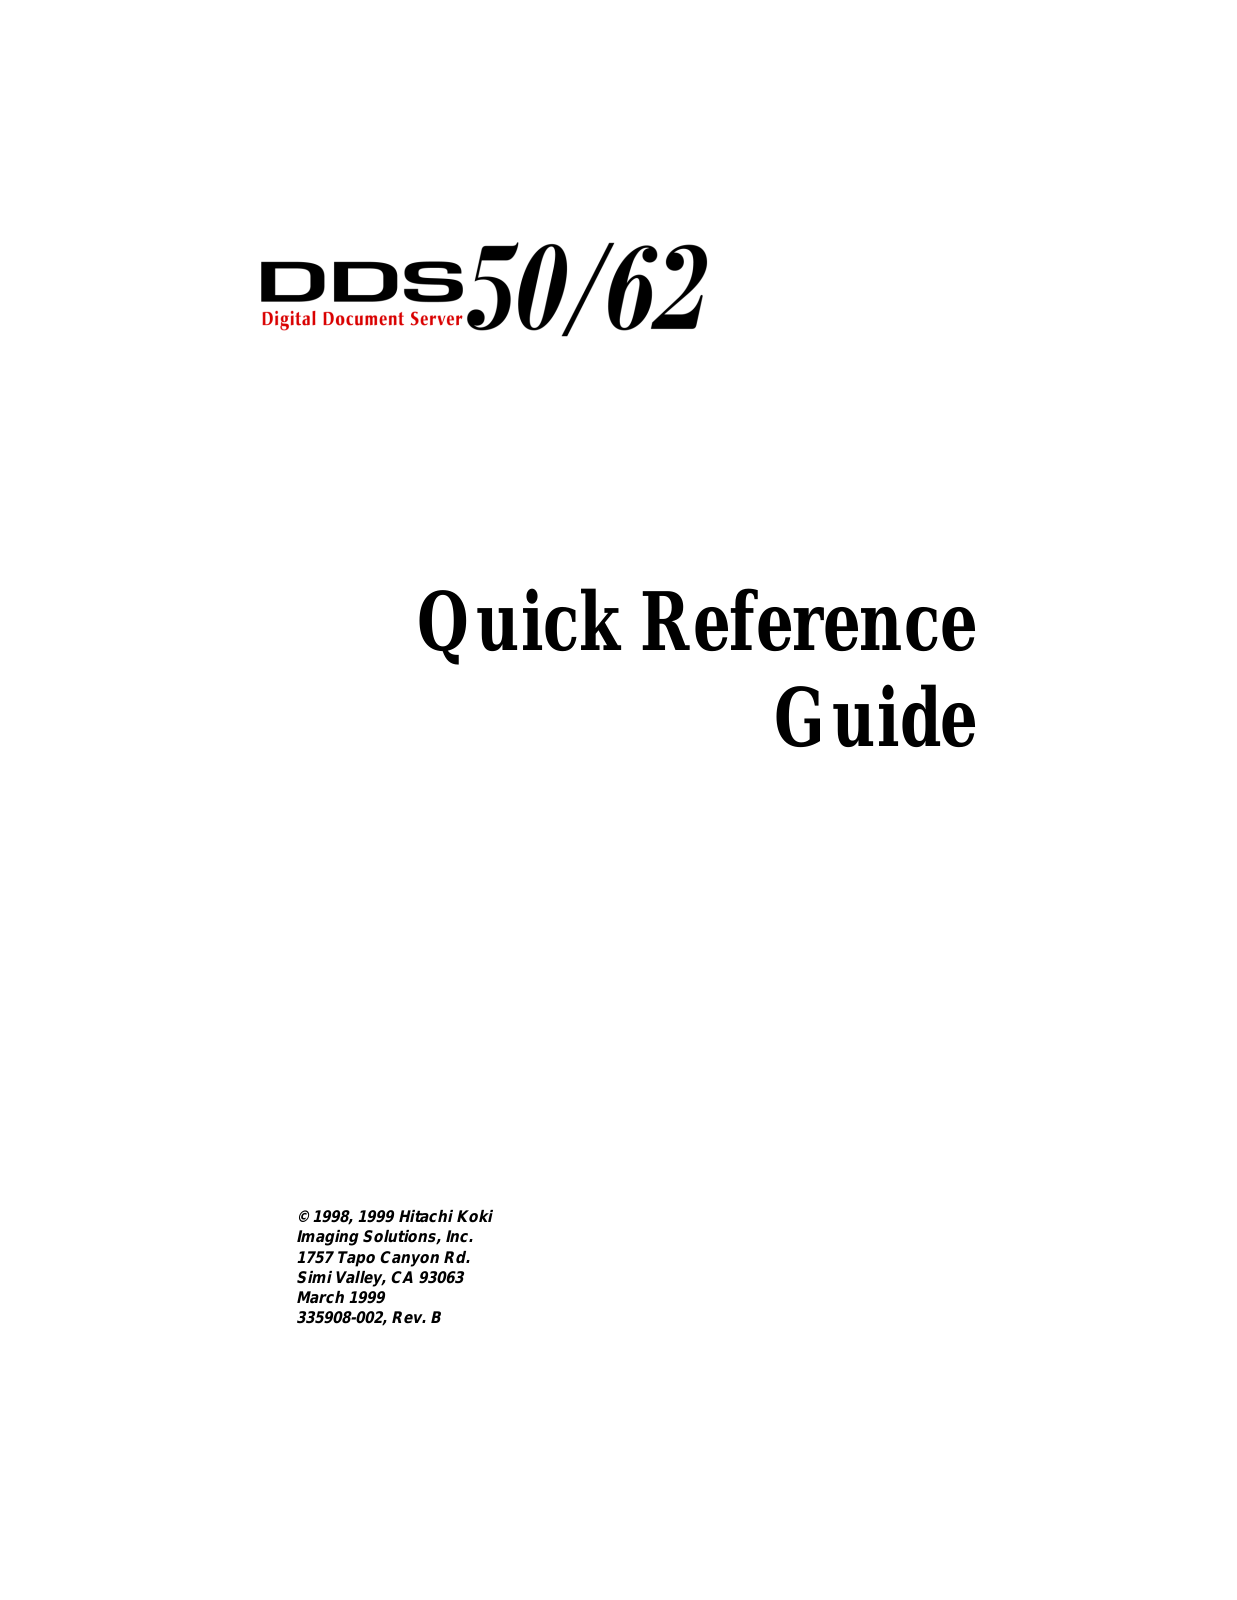 Hitachi DDS 62, DDS 50 User's Guide